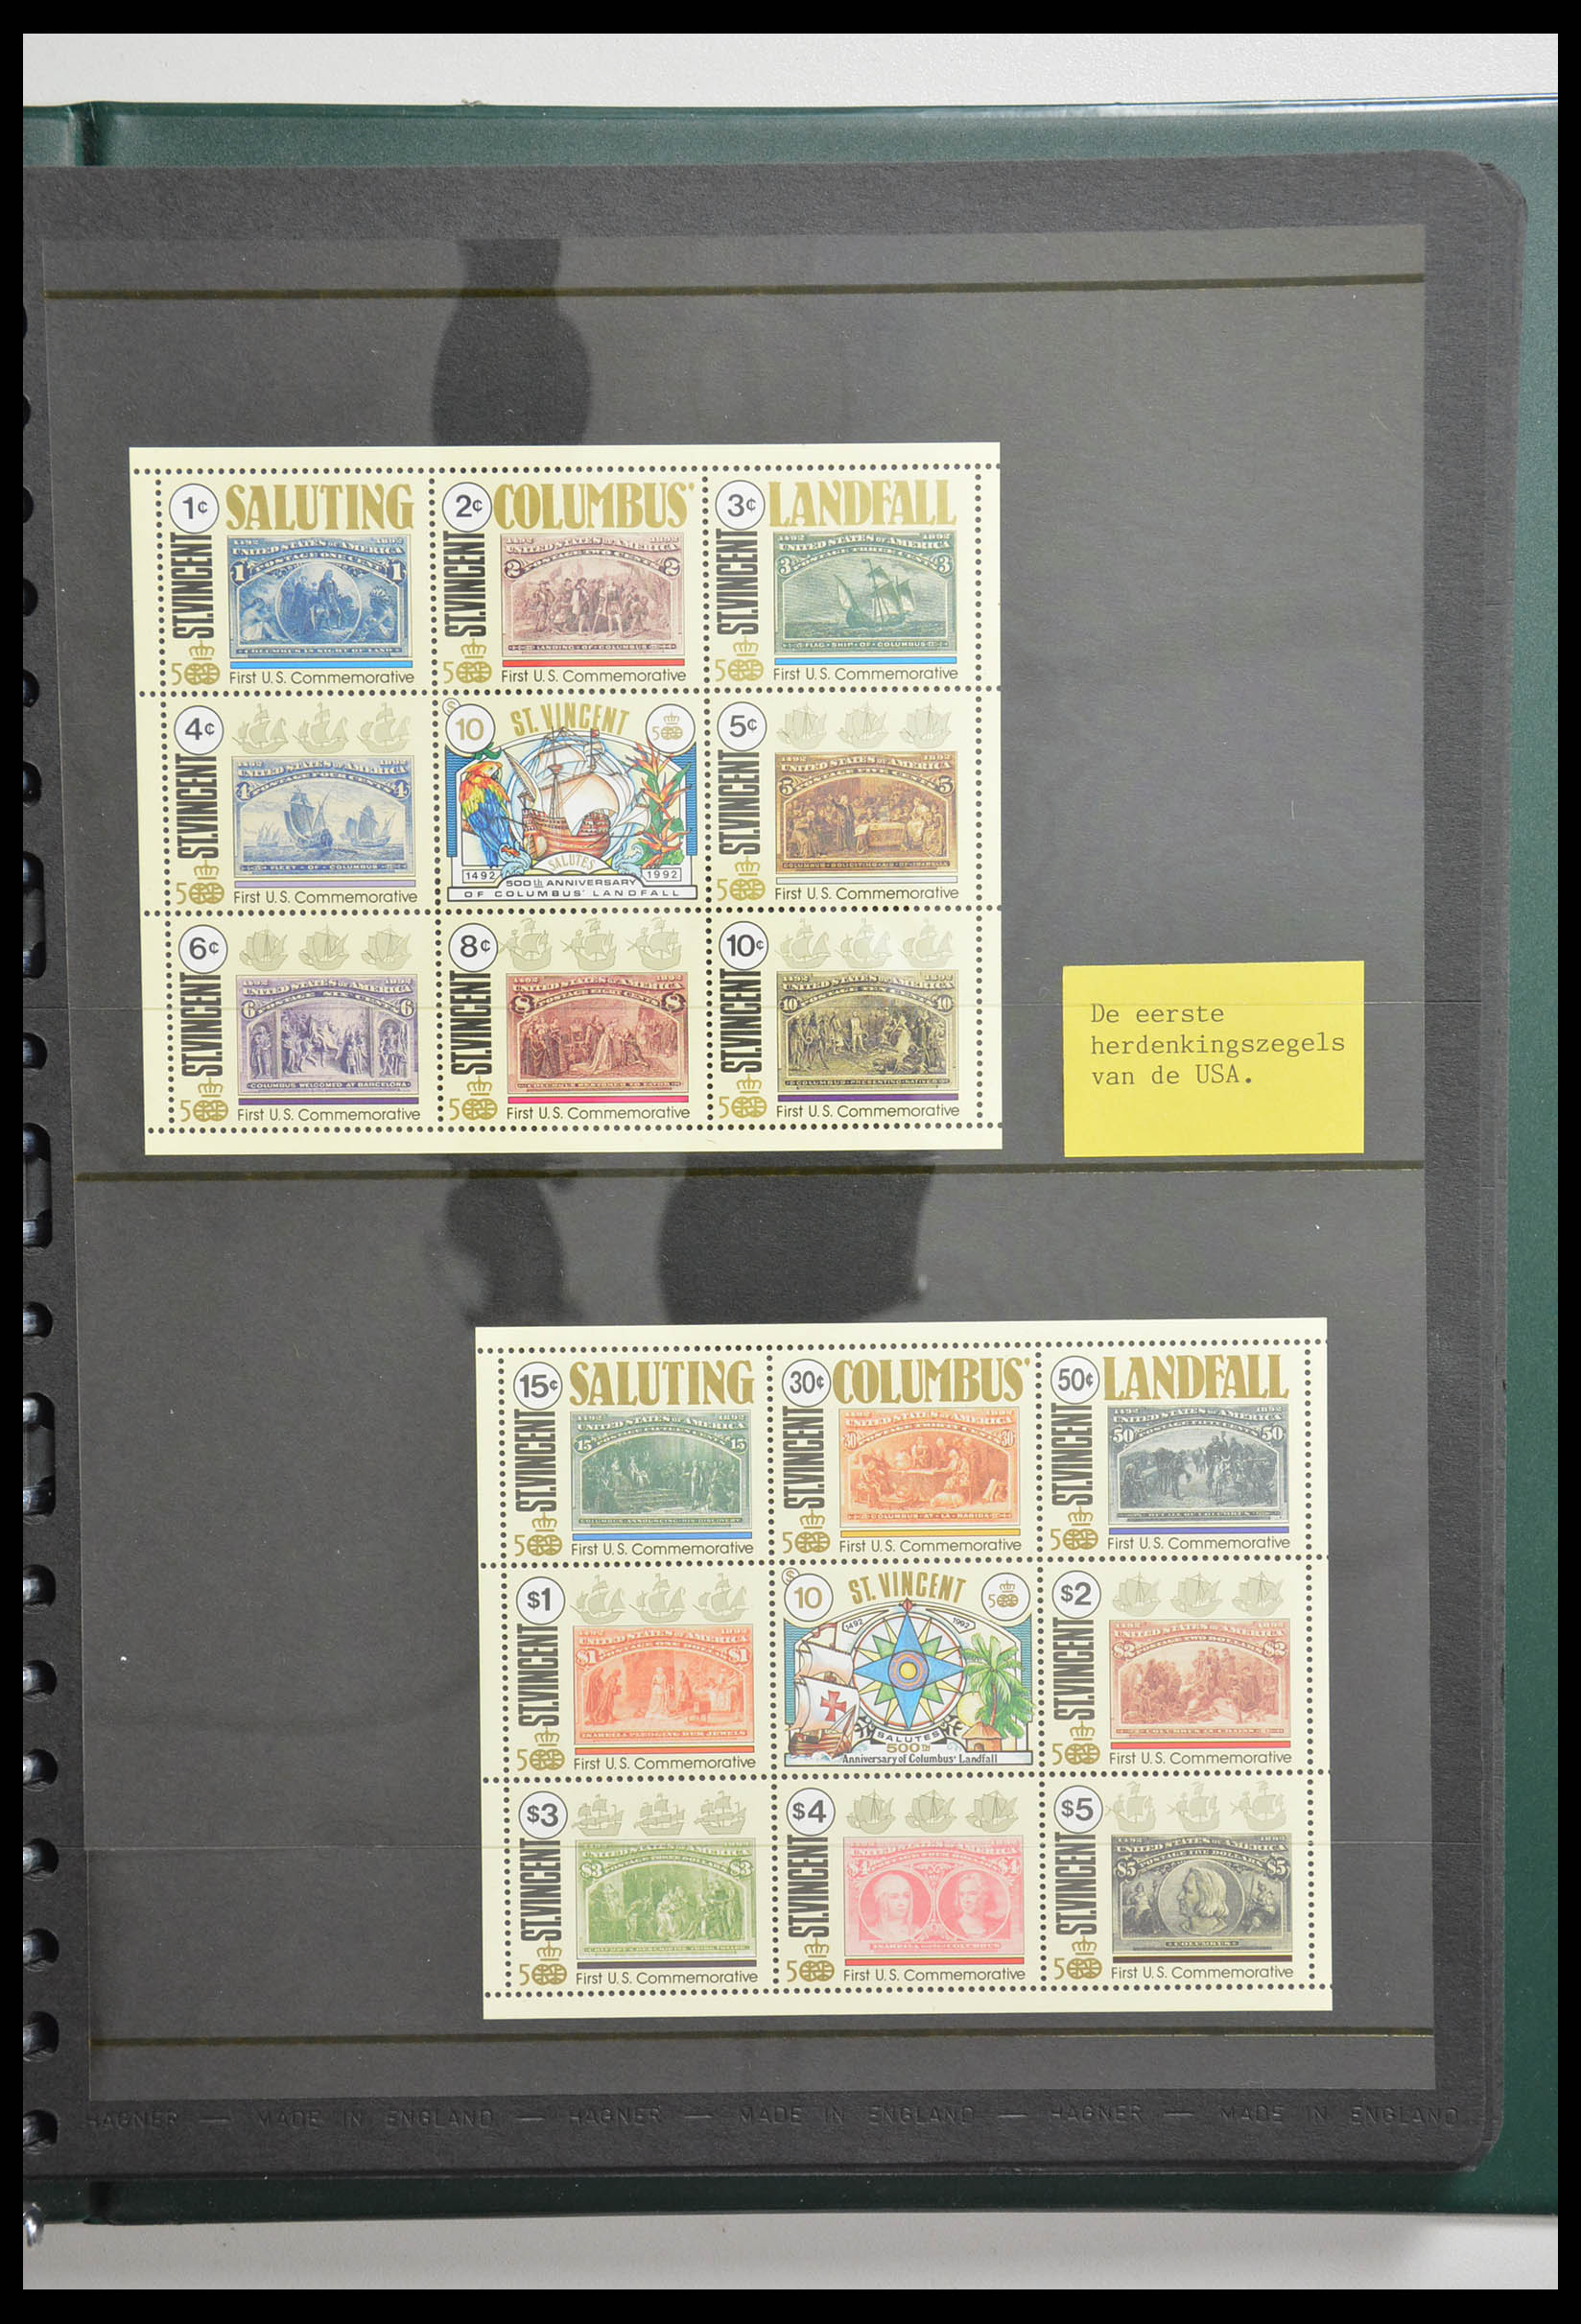 28337 102 - 28337 Postzegel op postzegel 1840-2001.